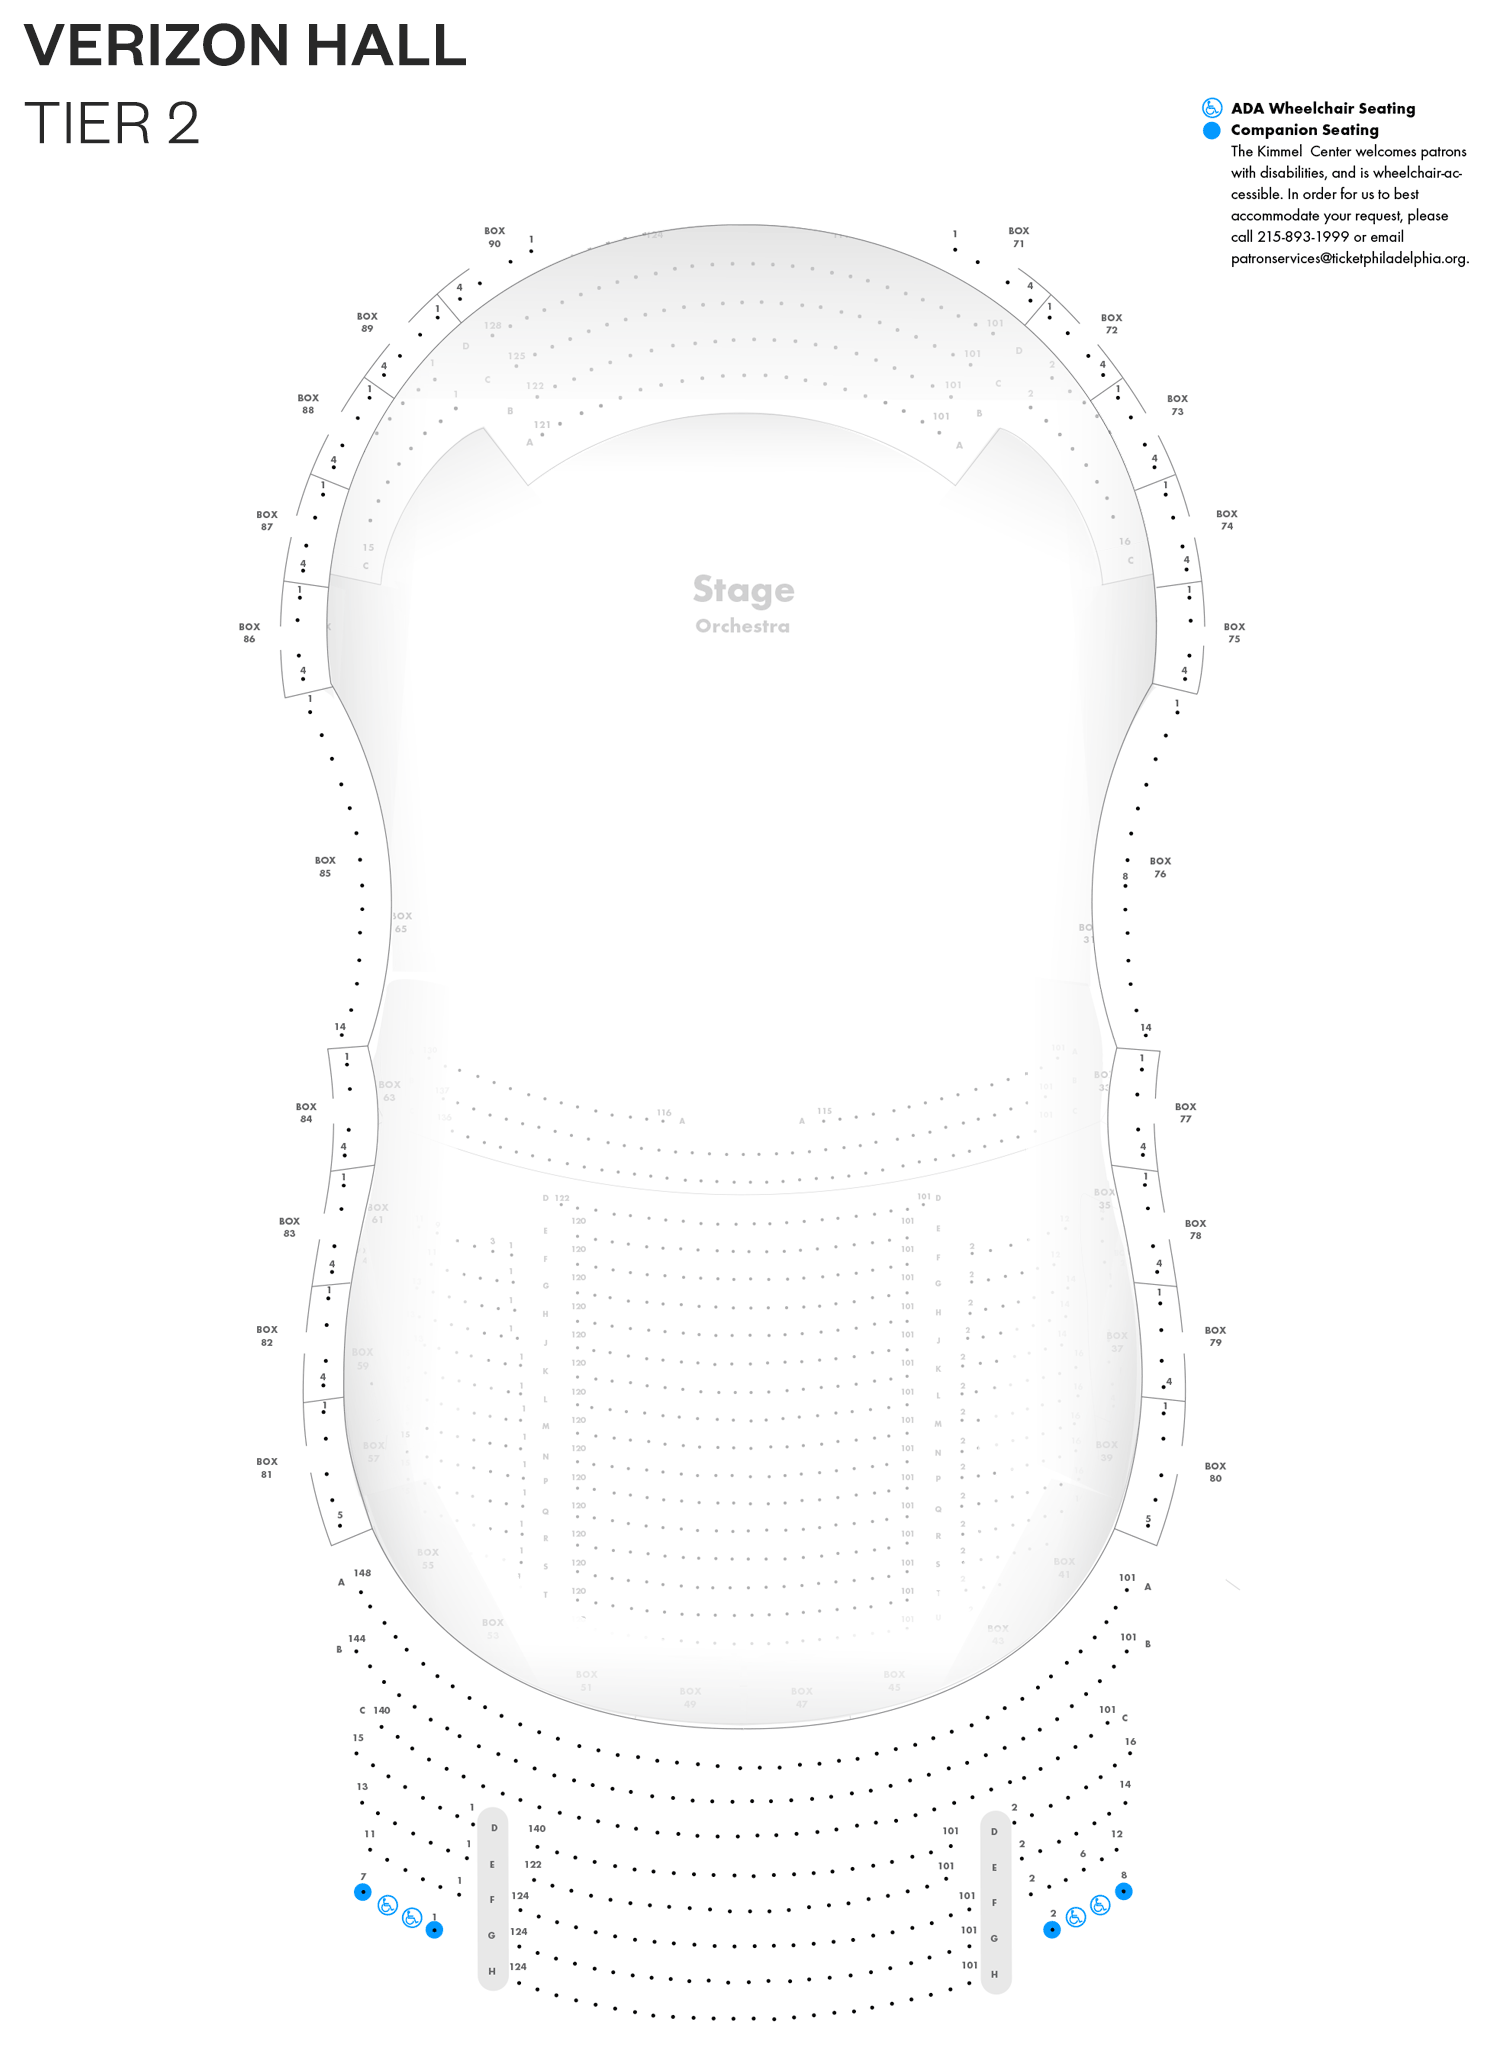 Verizon Hall - Second Tier - Seating Chart